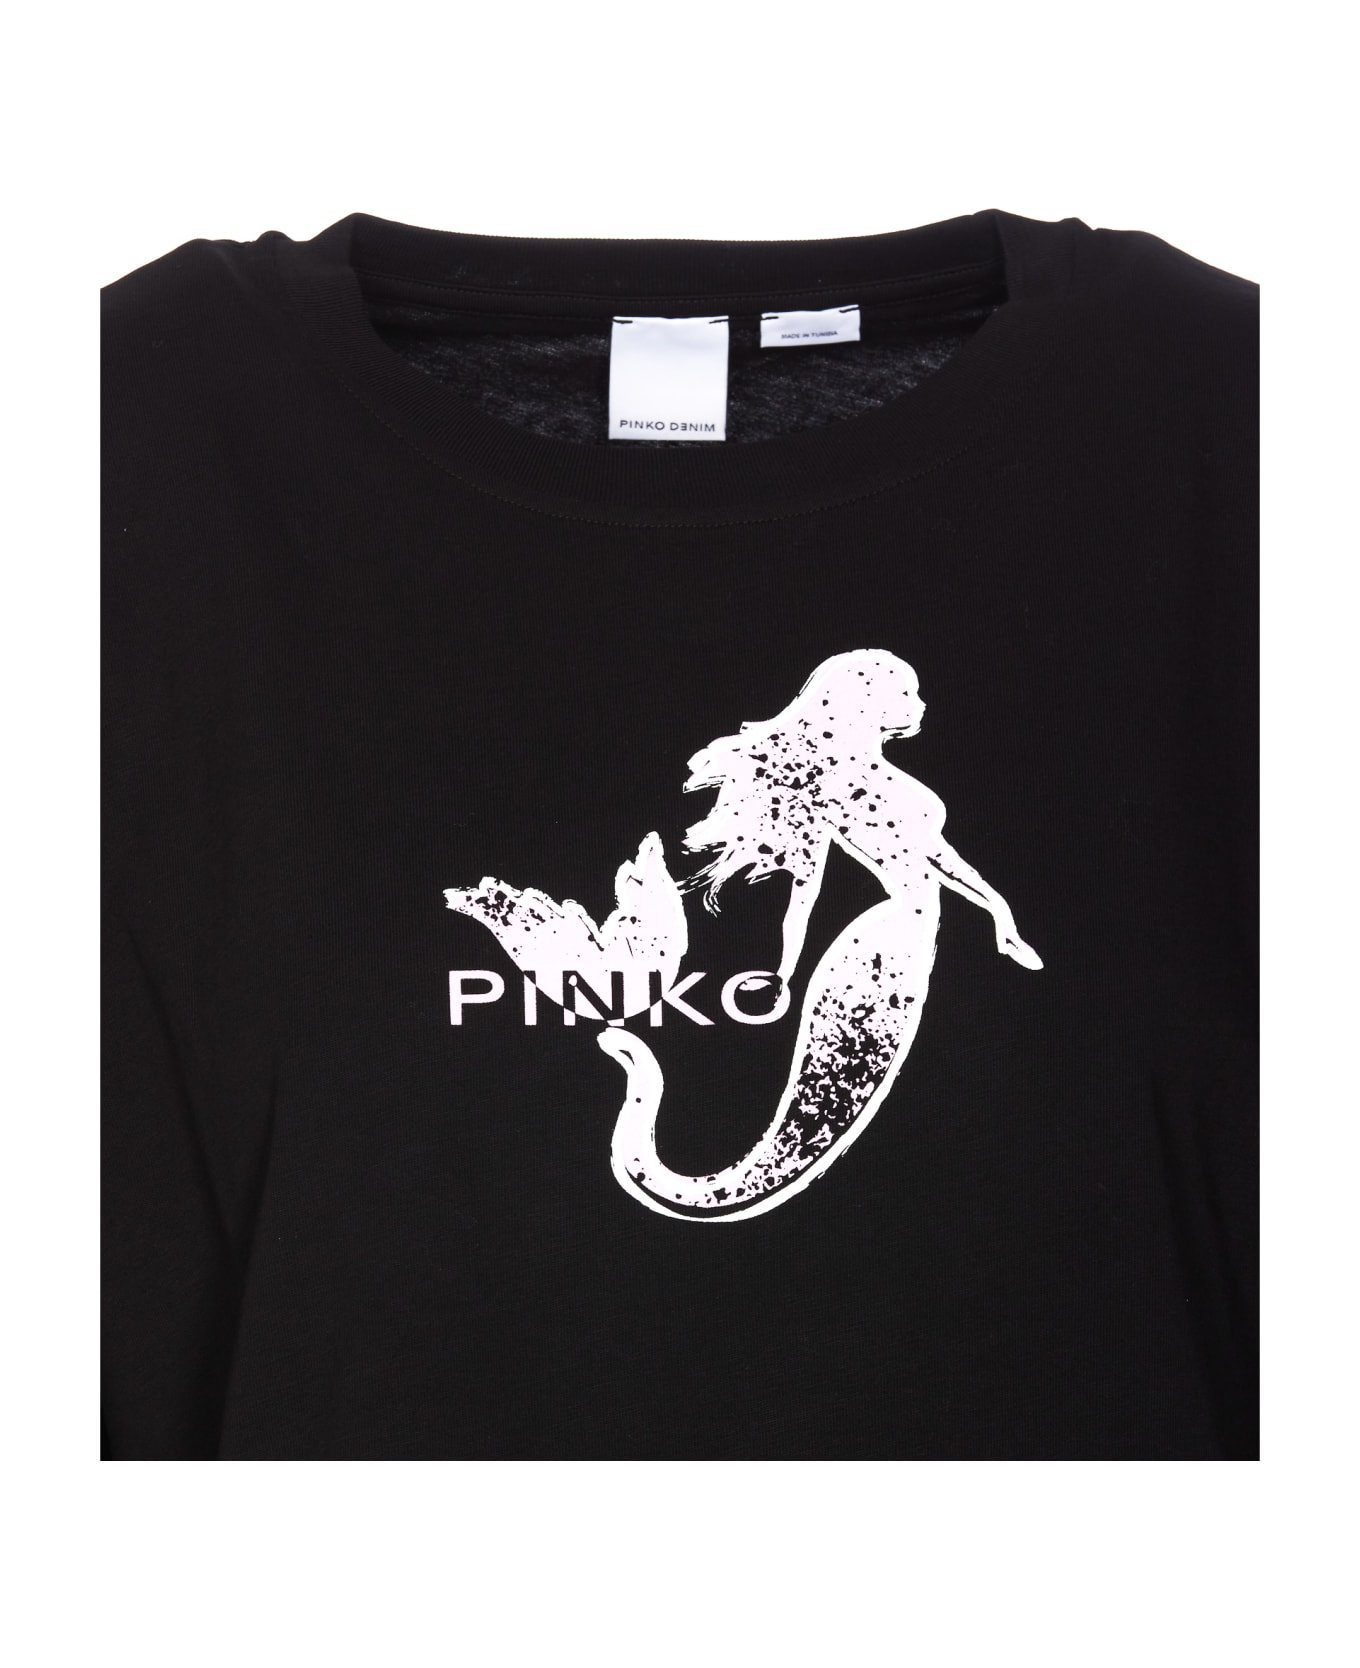 Pinko Televisivo T-shirt - Black Tシャツ